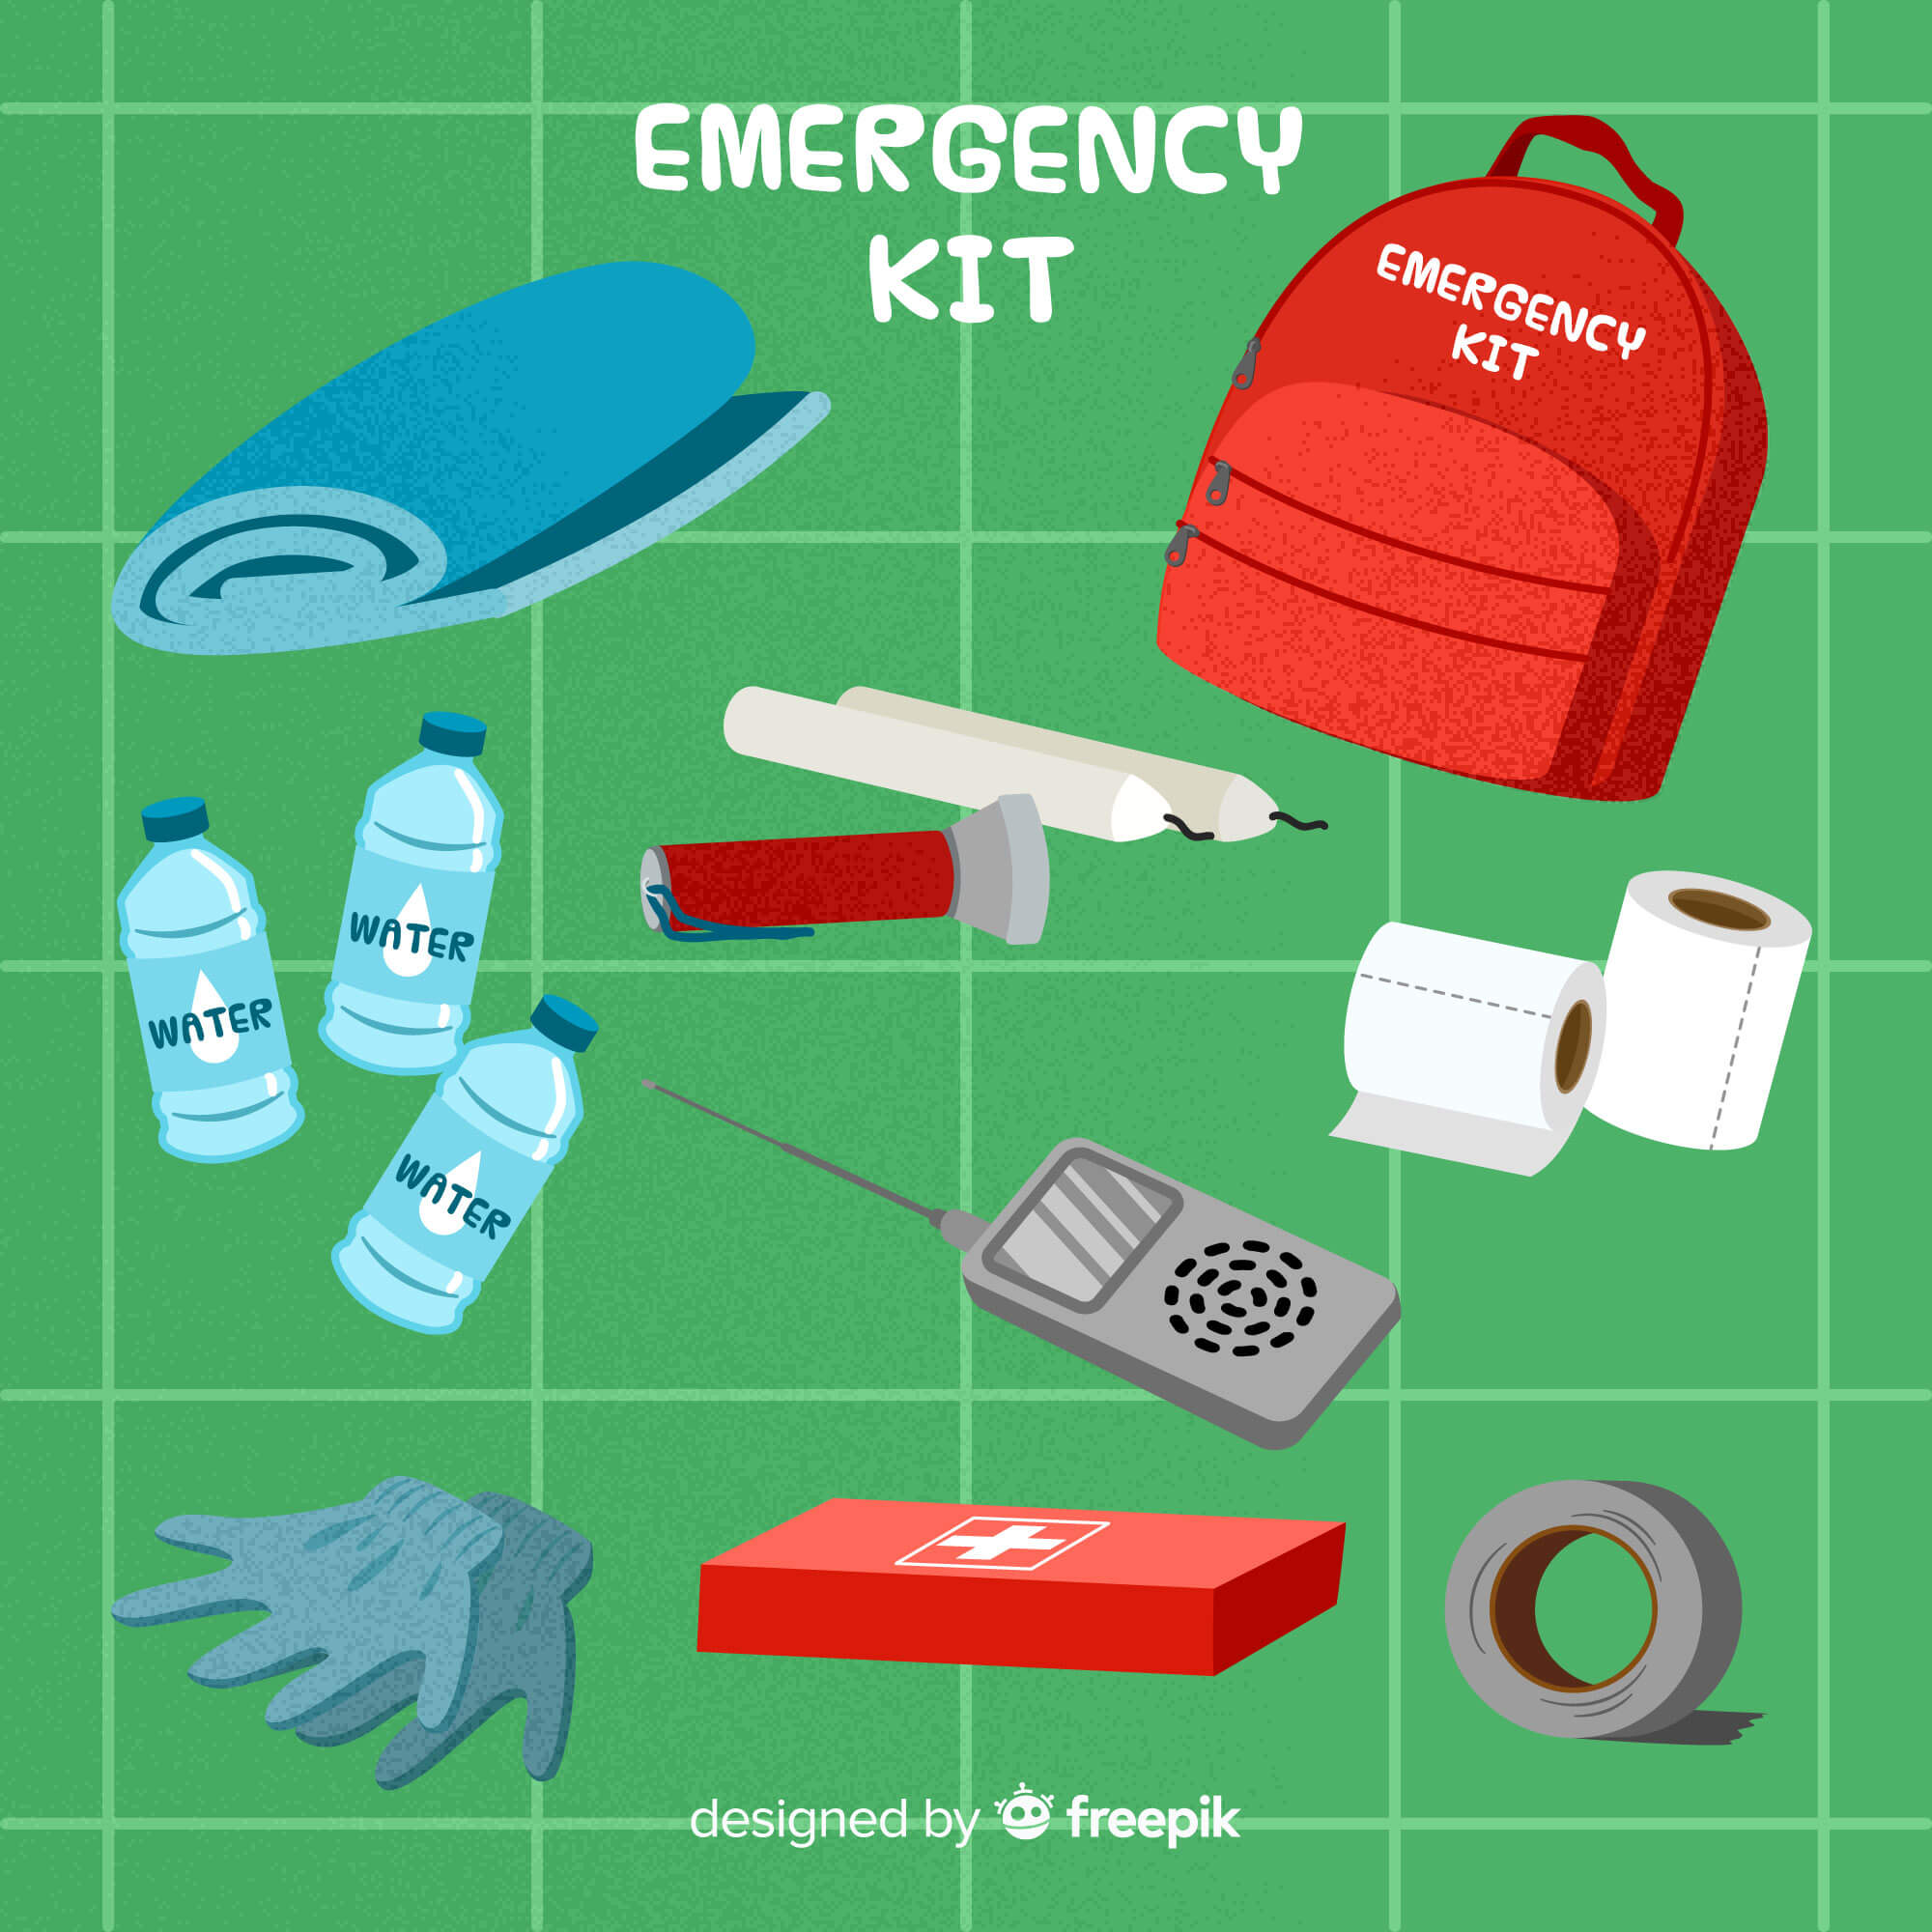 Equipment seen in an emergency kit